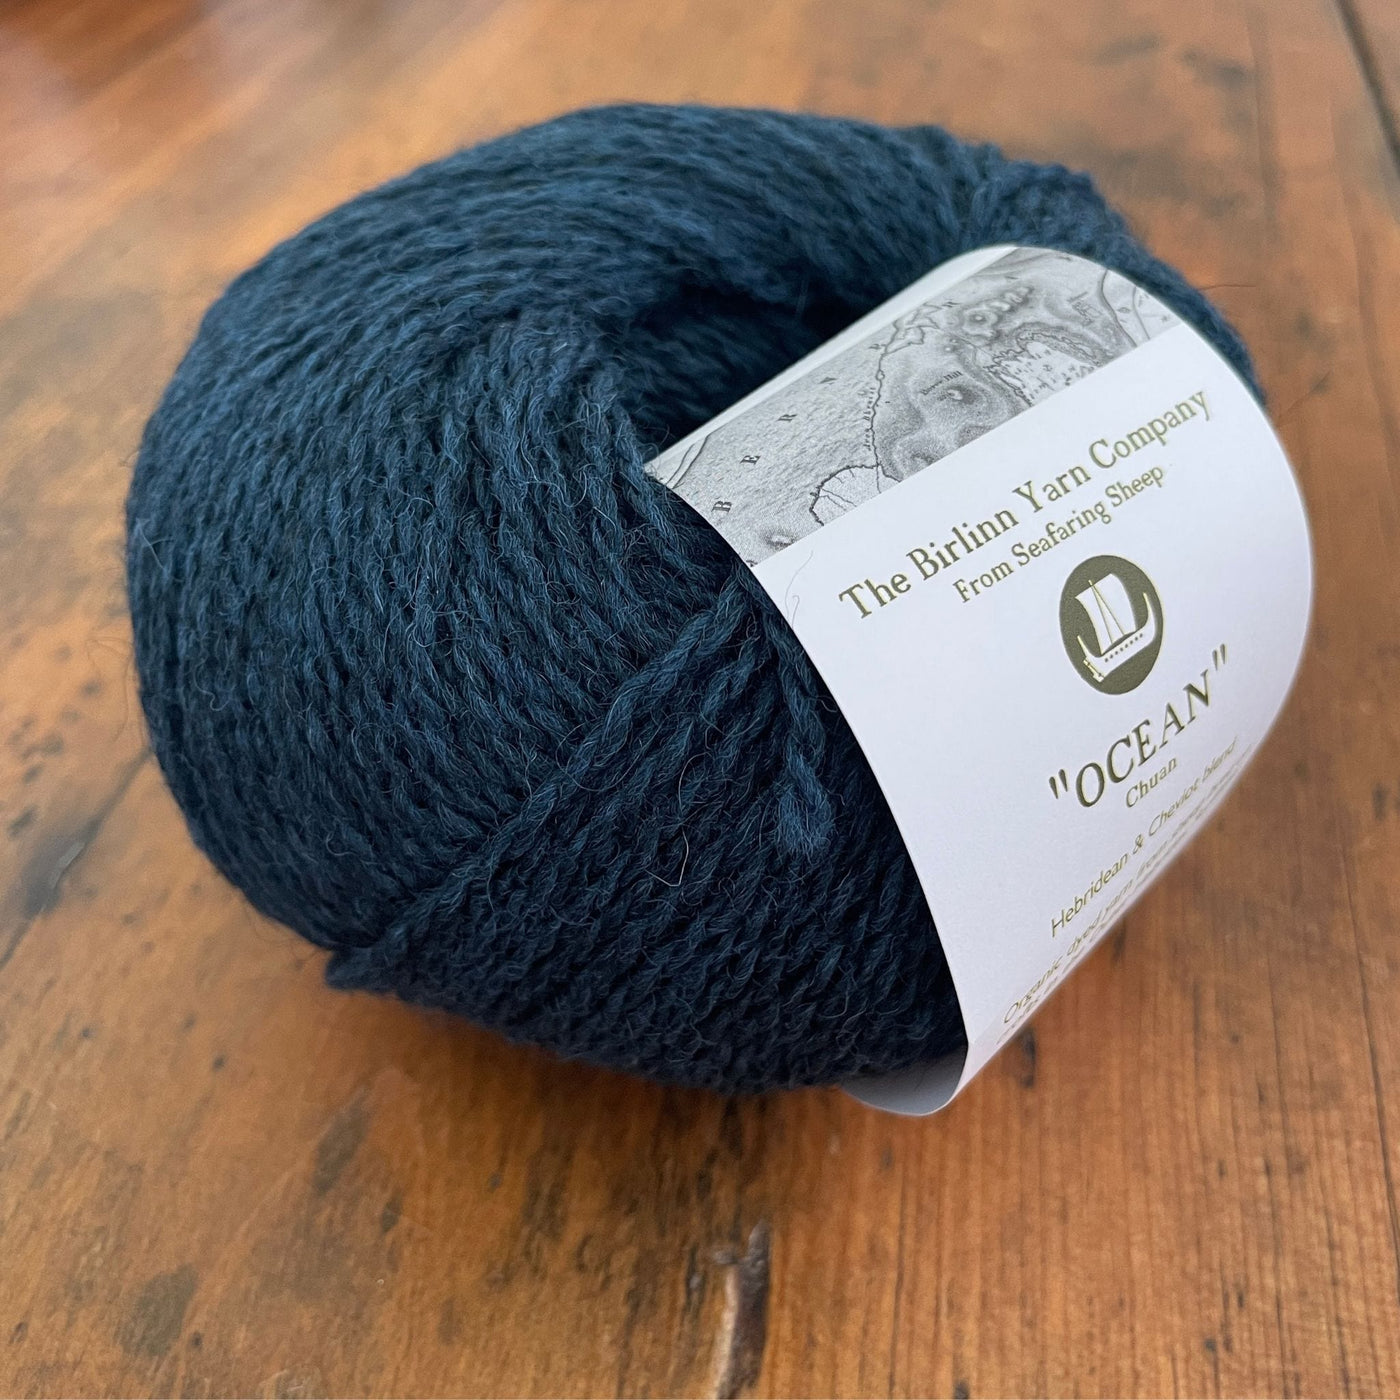 Birlinn Yarn Company Hebridean 4ply yarn shown in Ocean (Deep Blue)